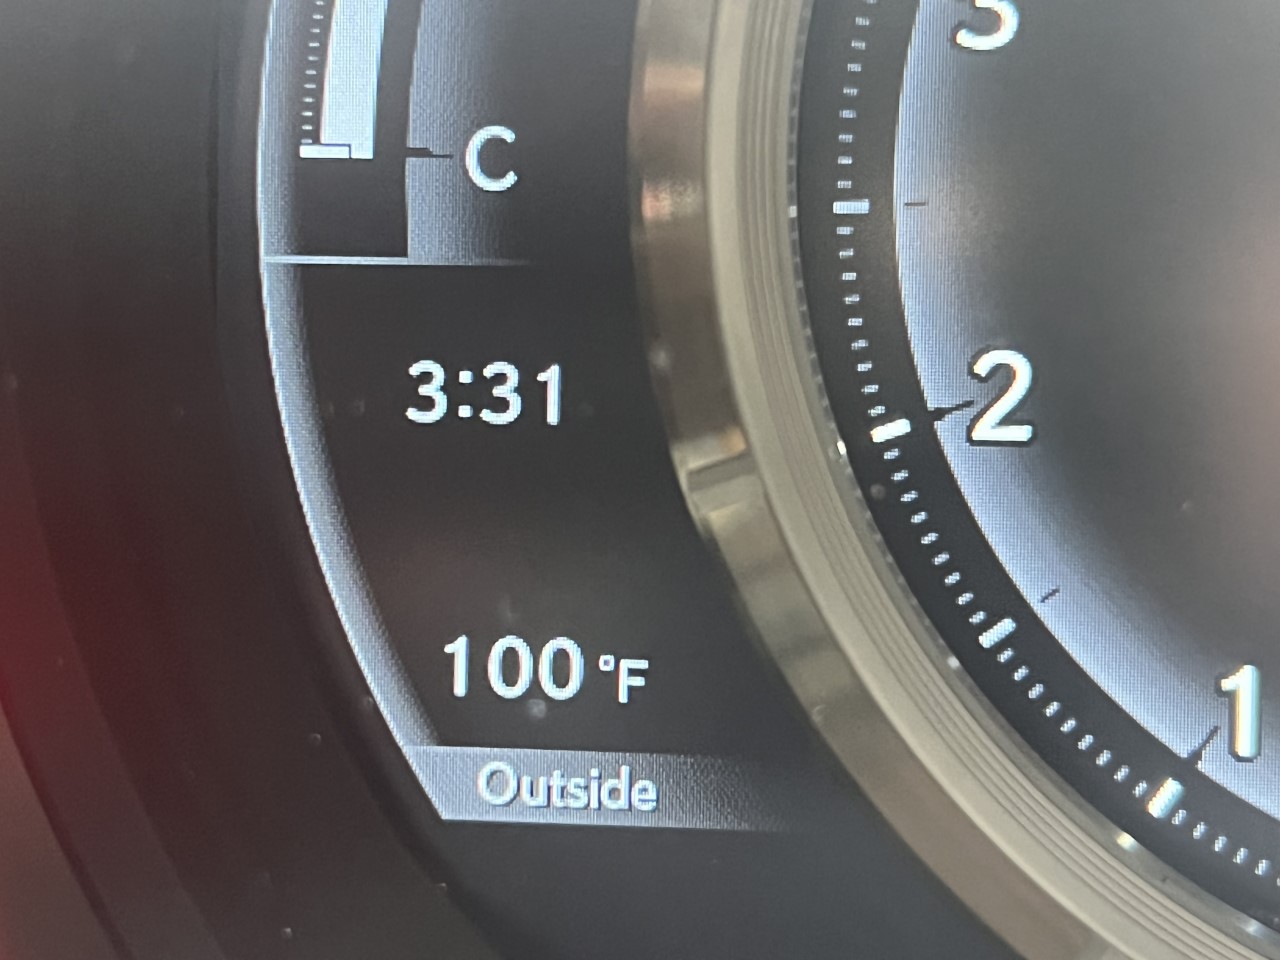 Testing Car's Outdoor Temperature Readings